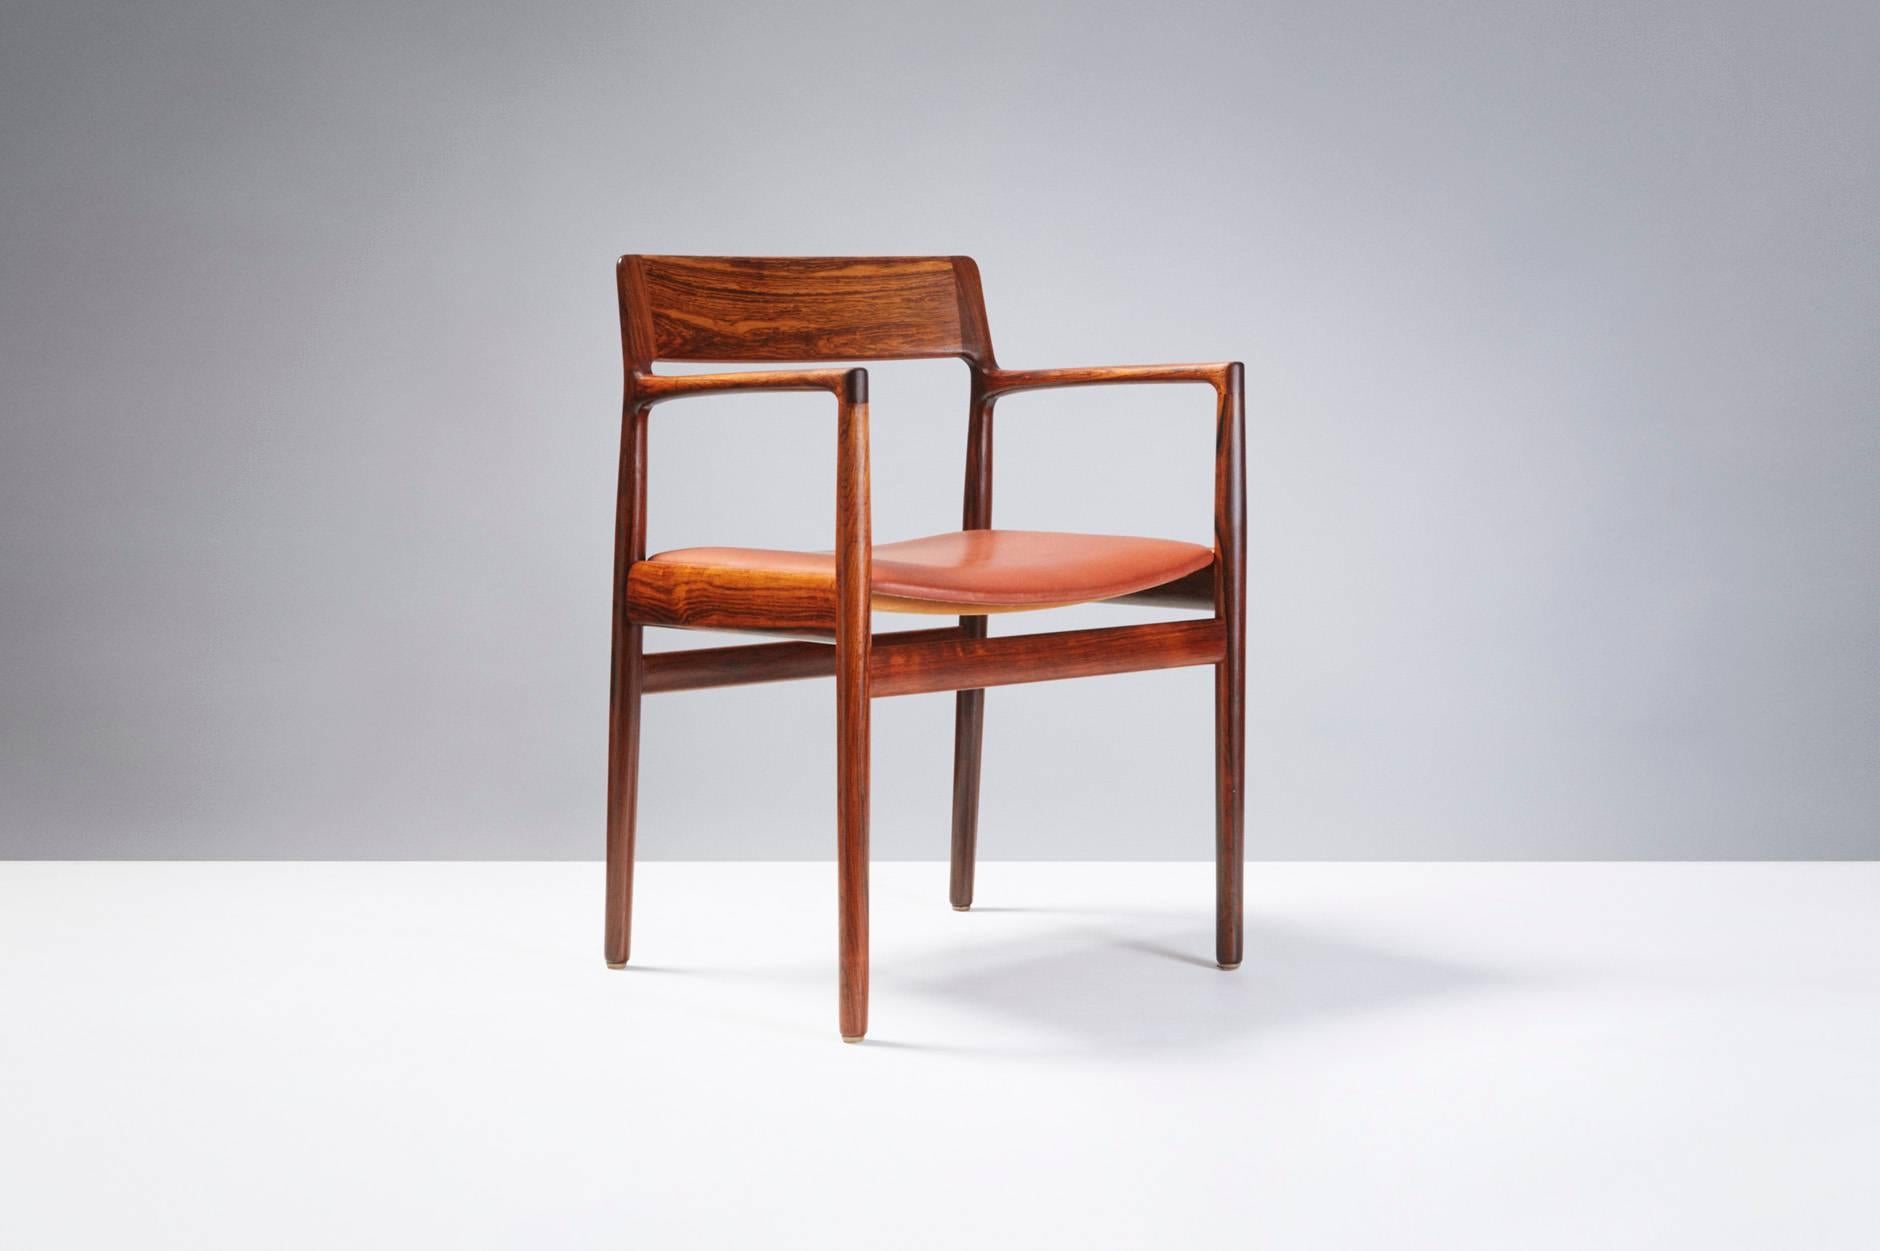 Rosewood armchair produced by Norgaard Mobelfabrik, Denmark. Original brown leather seat.